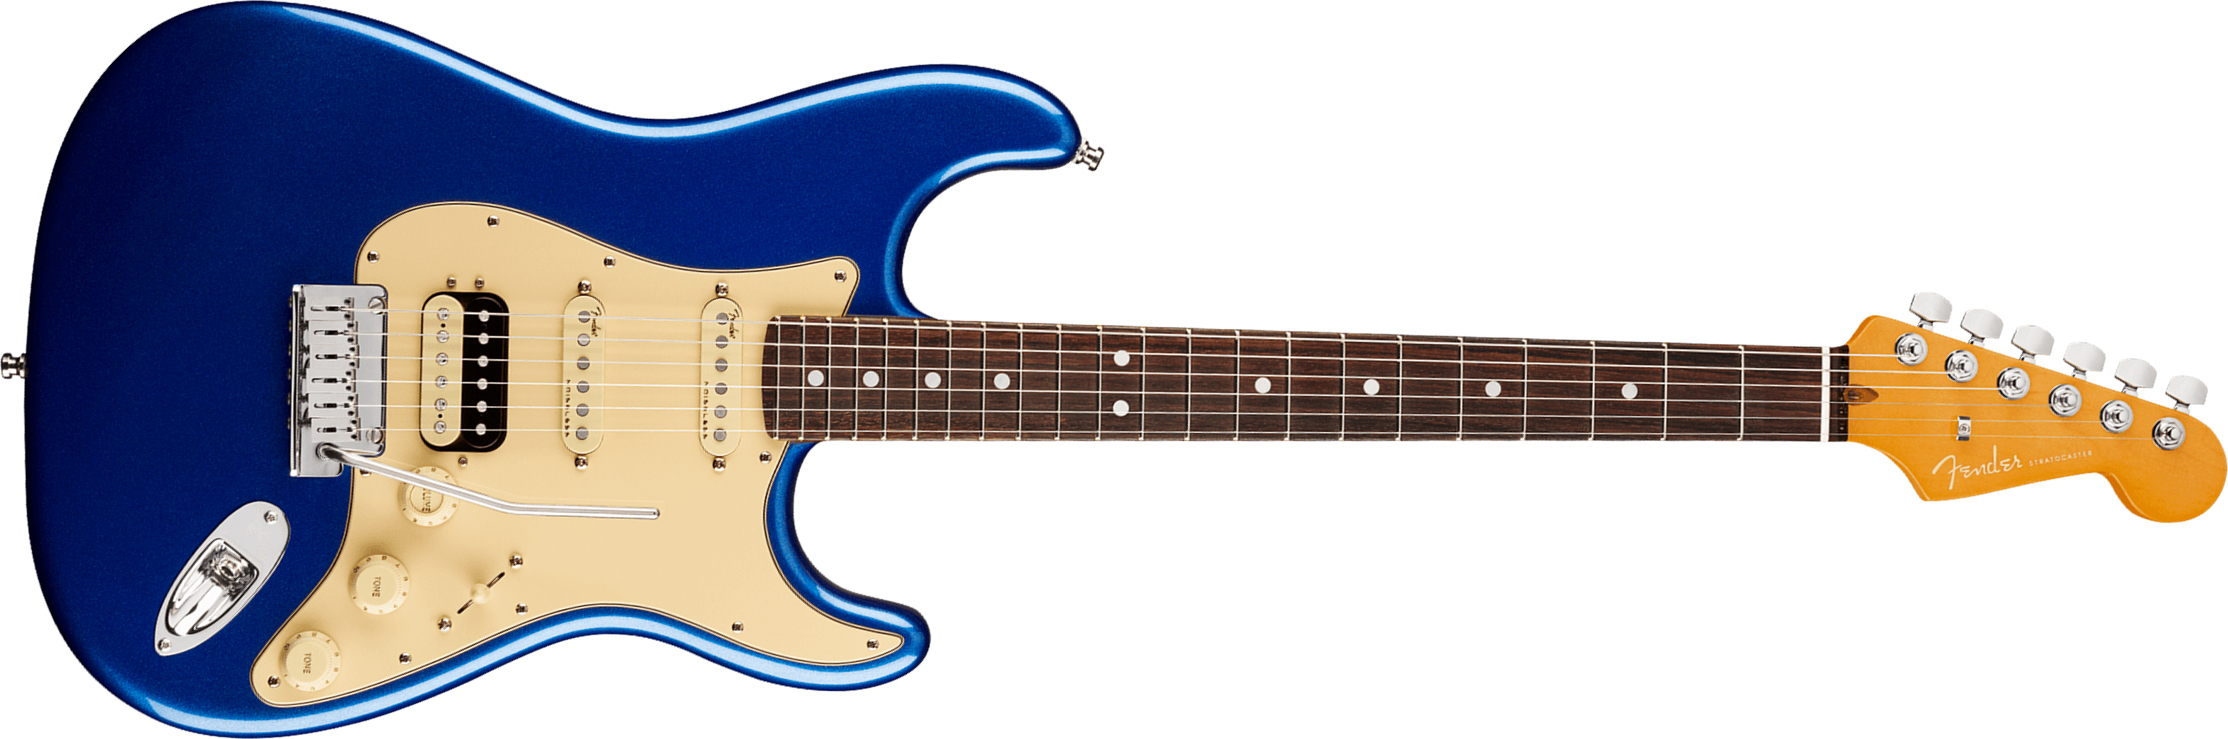 Fender Strat American Ultra Hss 2019 Usa Rw - Cobra Blue - Str shape electric guitar - Main picture